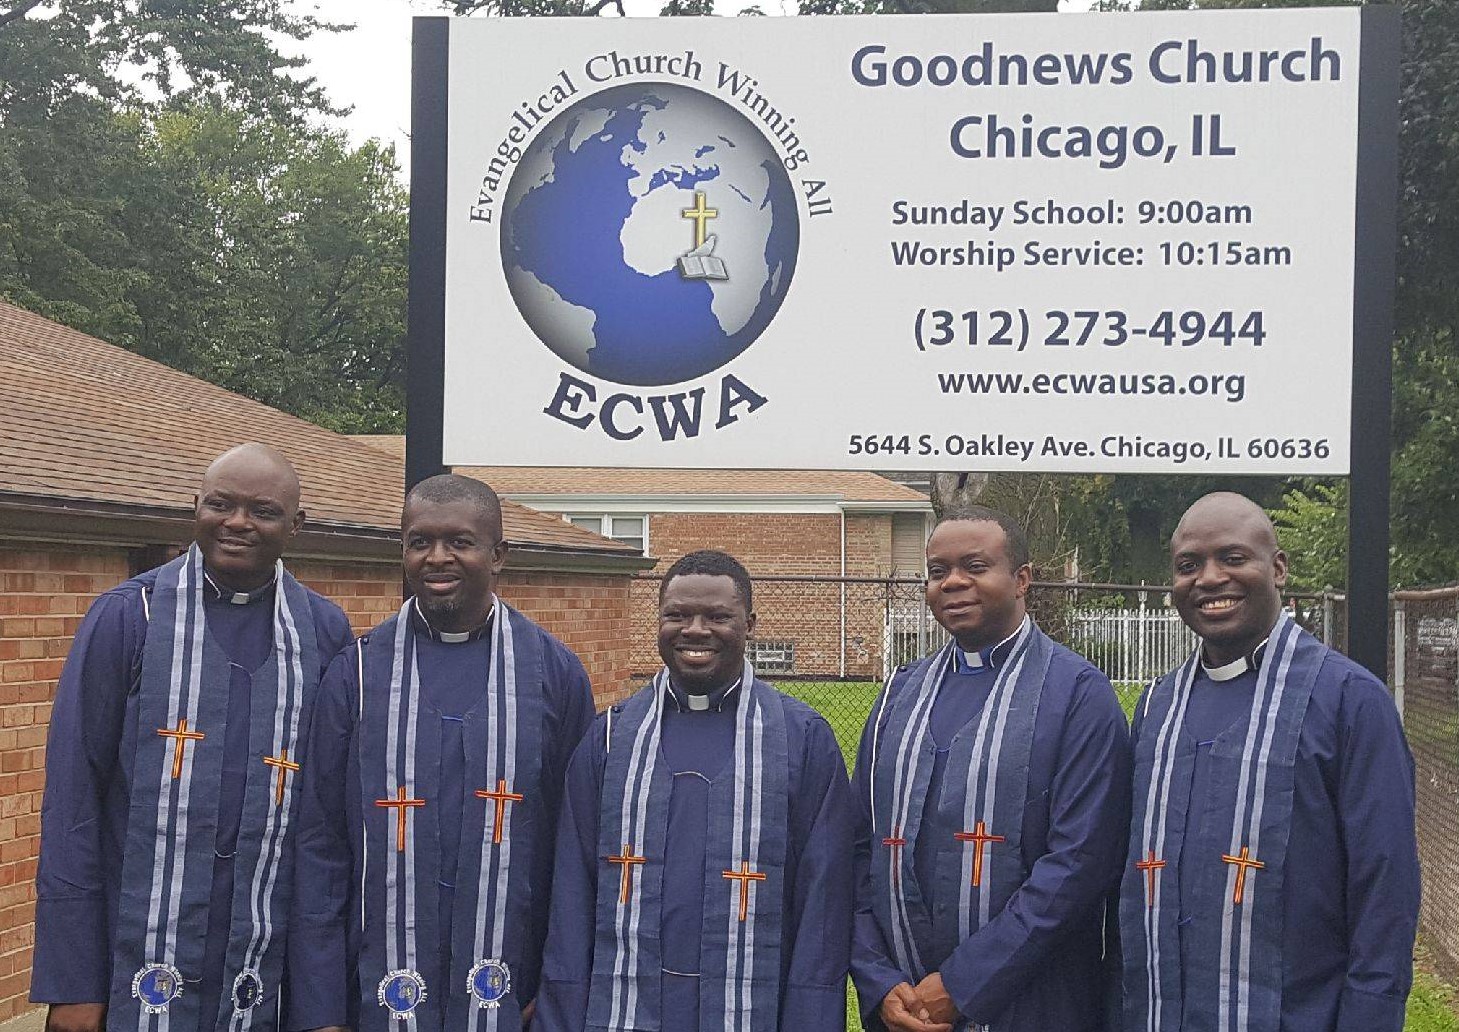 ECWA newly ordained ministers at the ECWA Goodnews Church in Chicago, IL, USA (from left to right are, Rev. Zachs-Toro Gaiya, Rev. Caleb Afulike, Rev. John David, Rev. Dr. Victor Ezigbo and Rev. Boman Bognet).